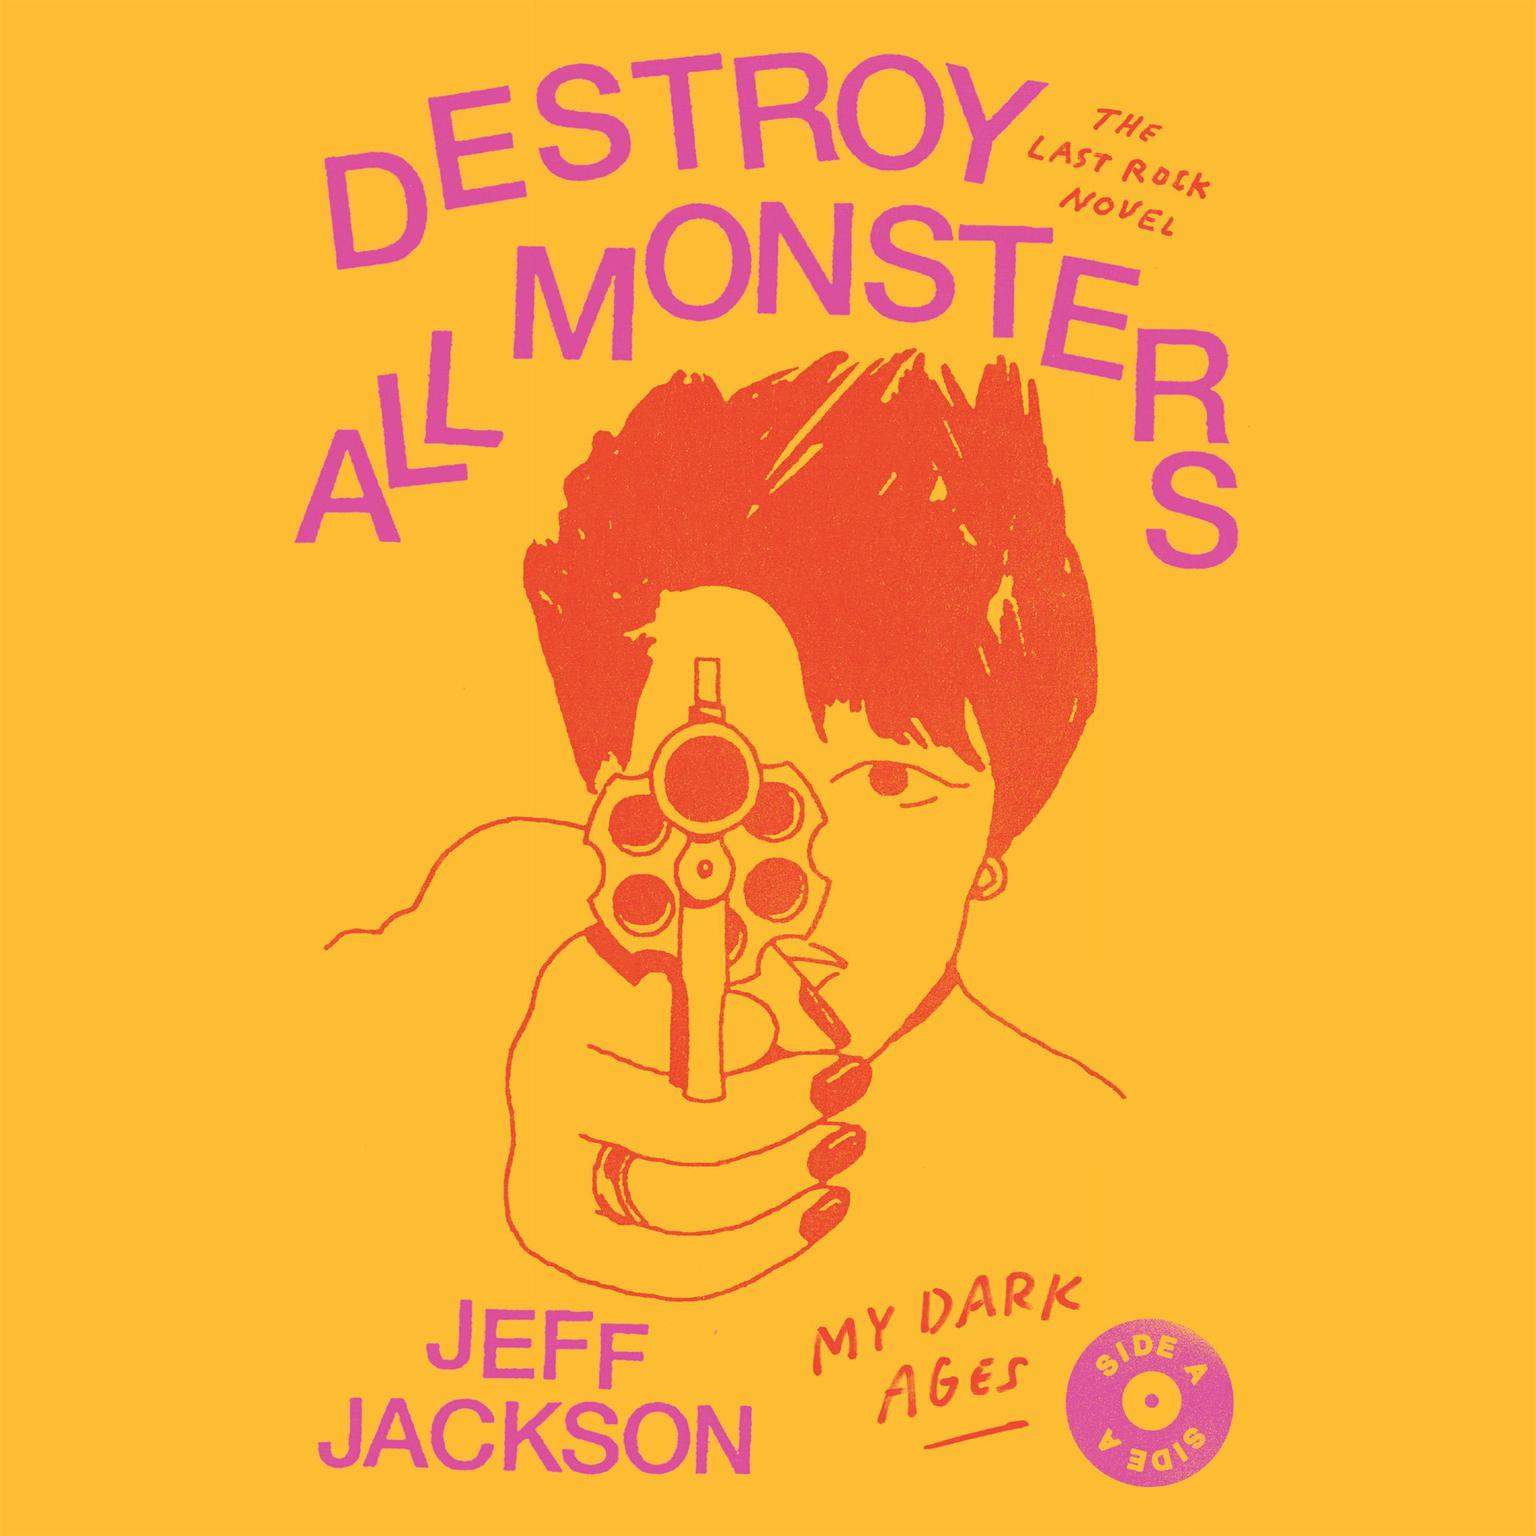 Destroy All Monsters: The Last Rock Novel Audiobook, by Jeff Jackson